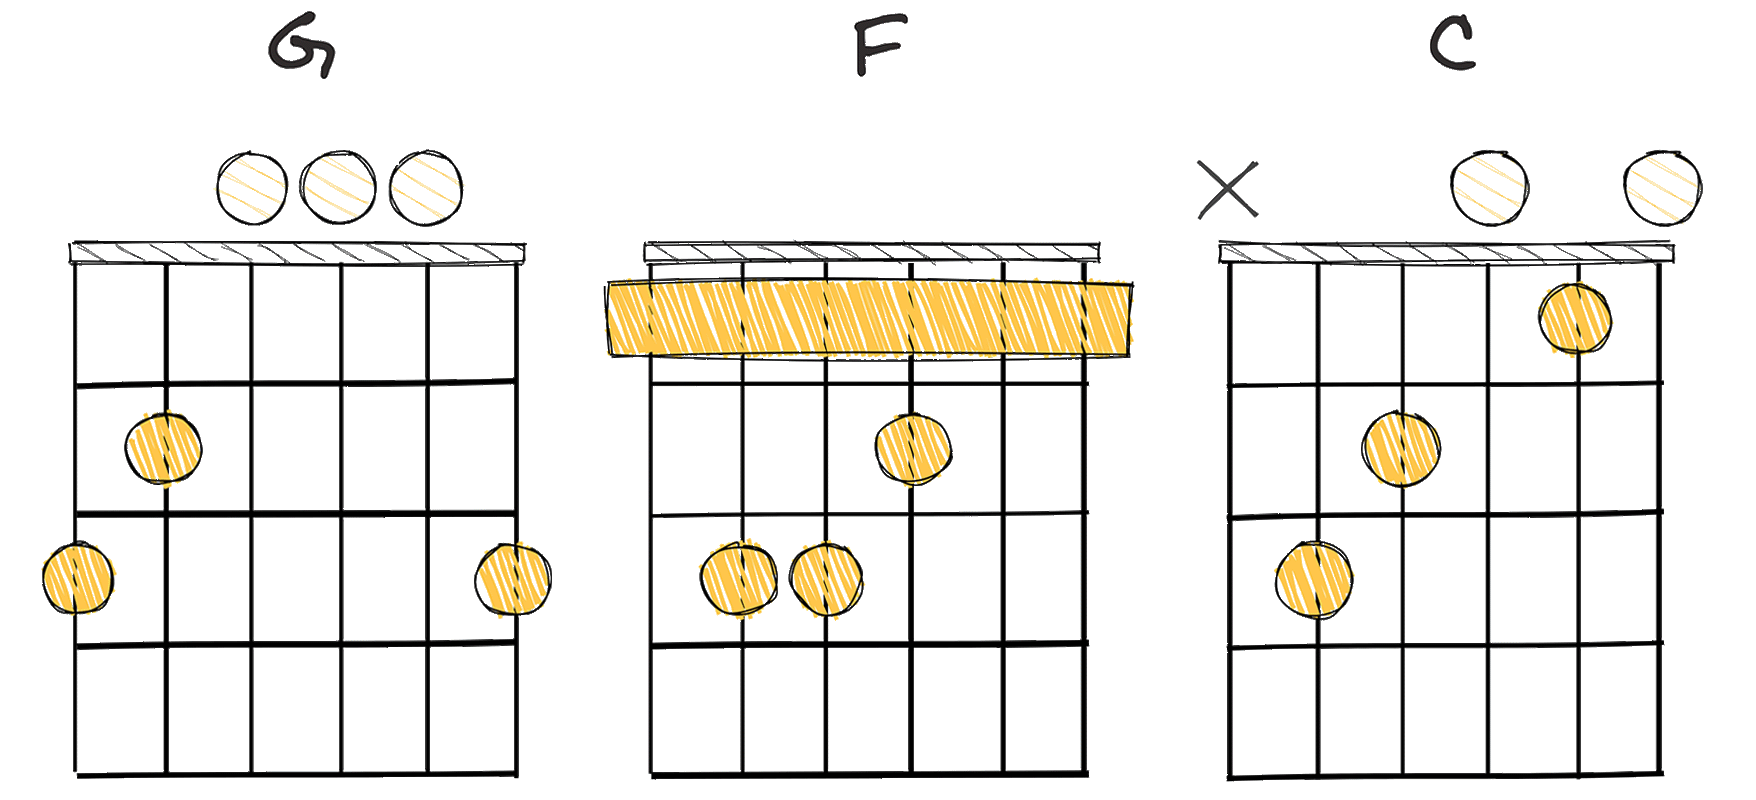 V - IV - I (5-4-1) chords diagram